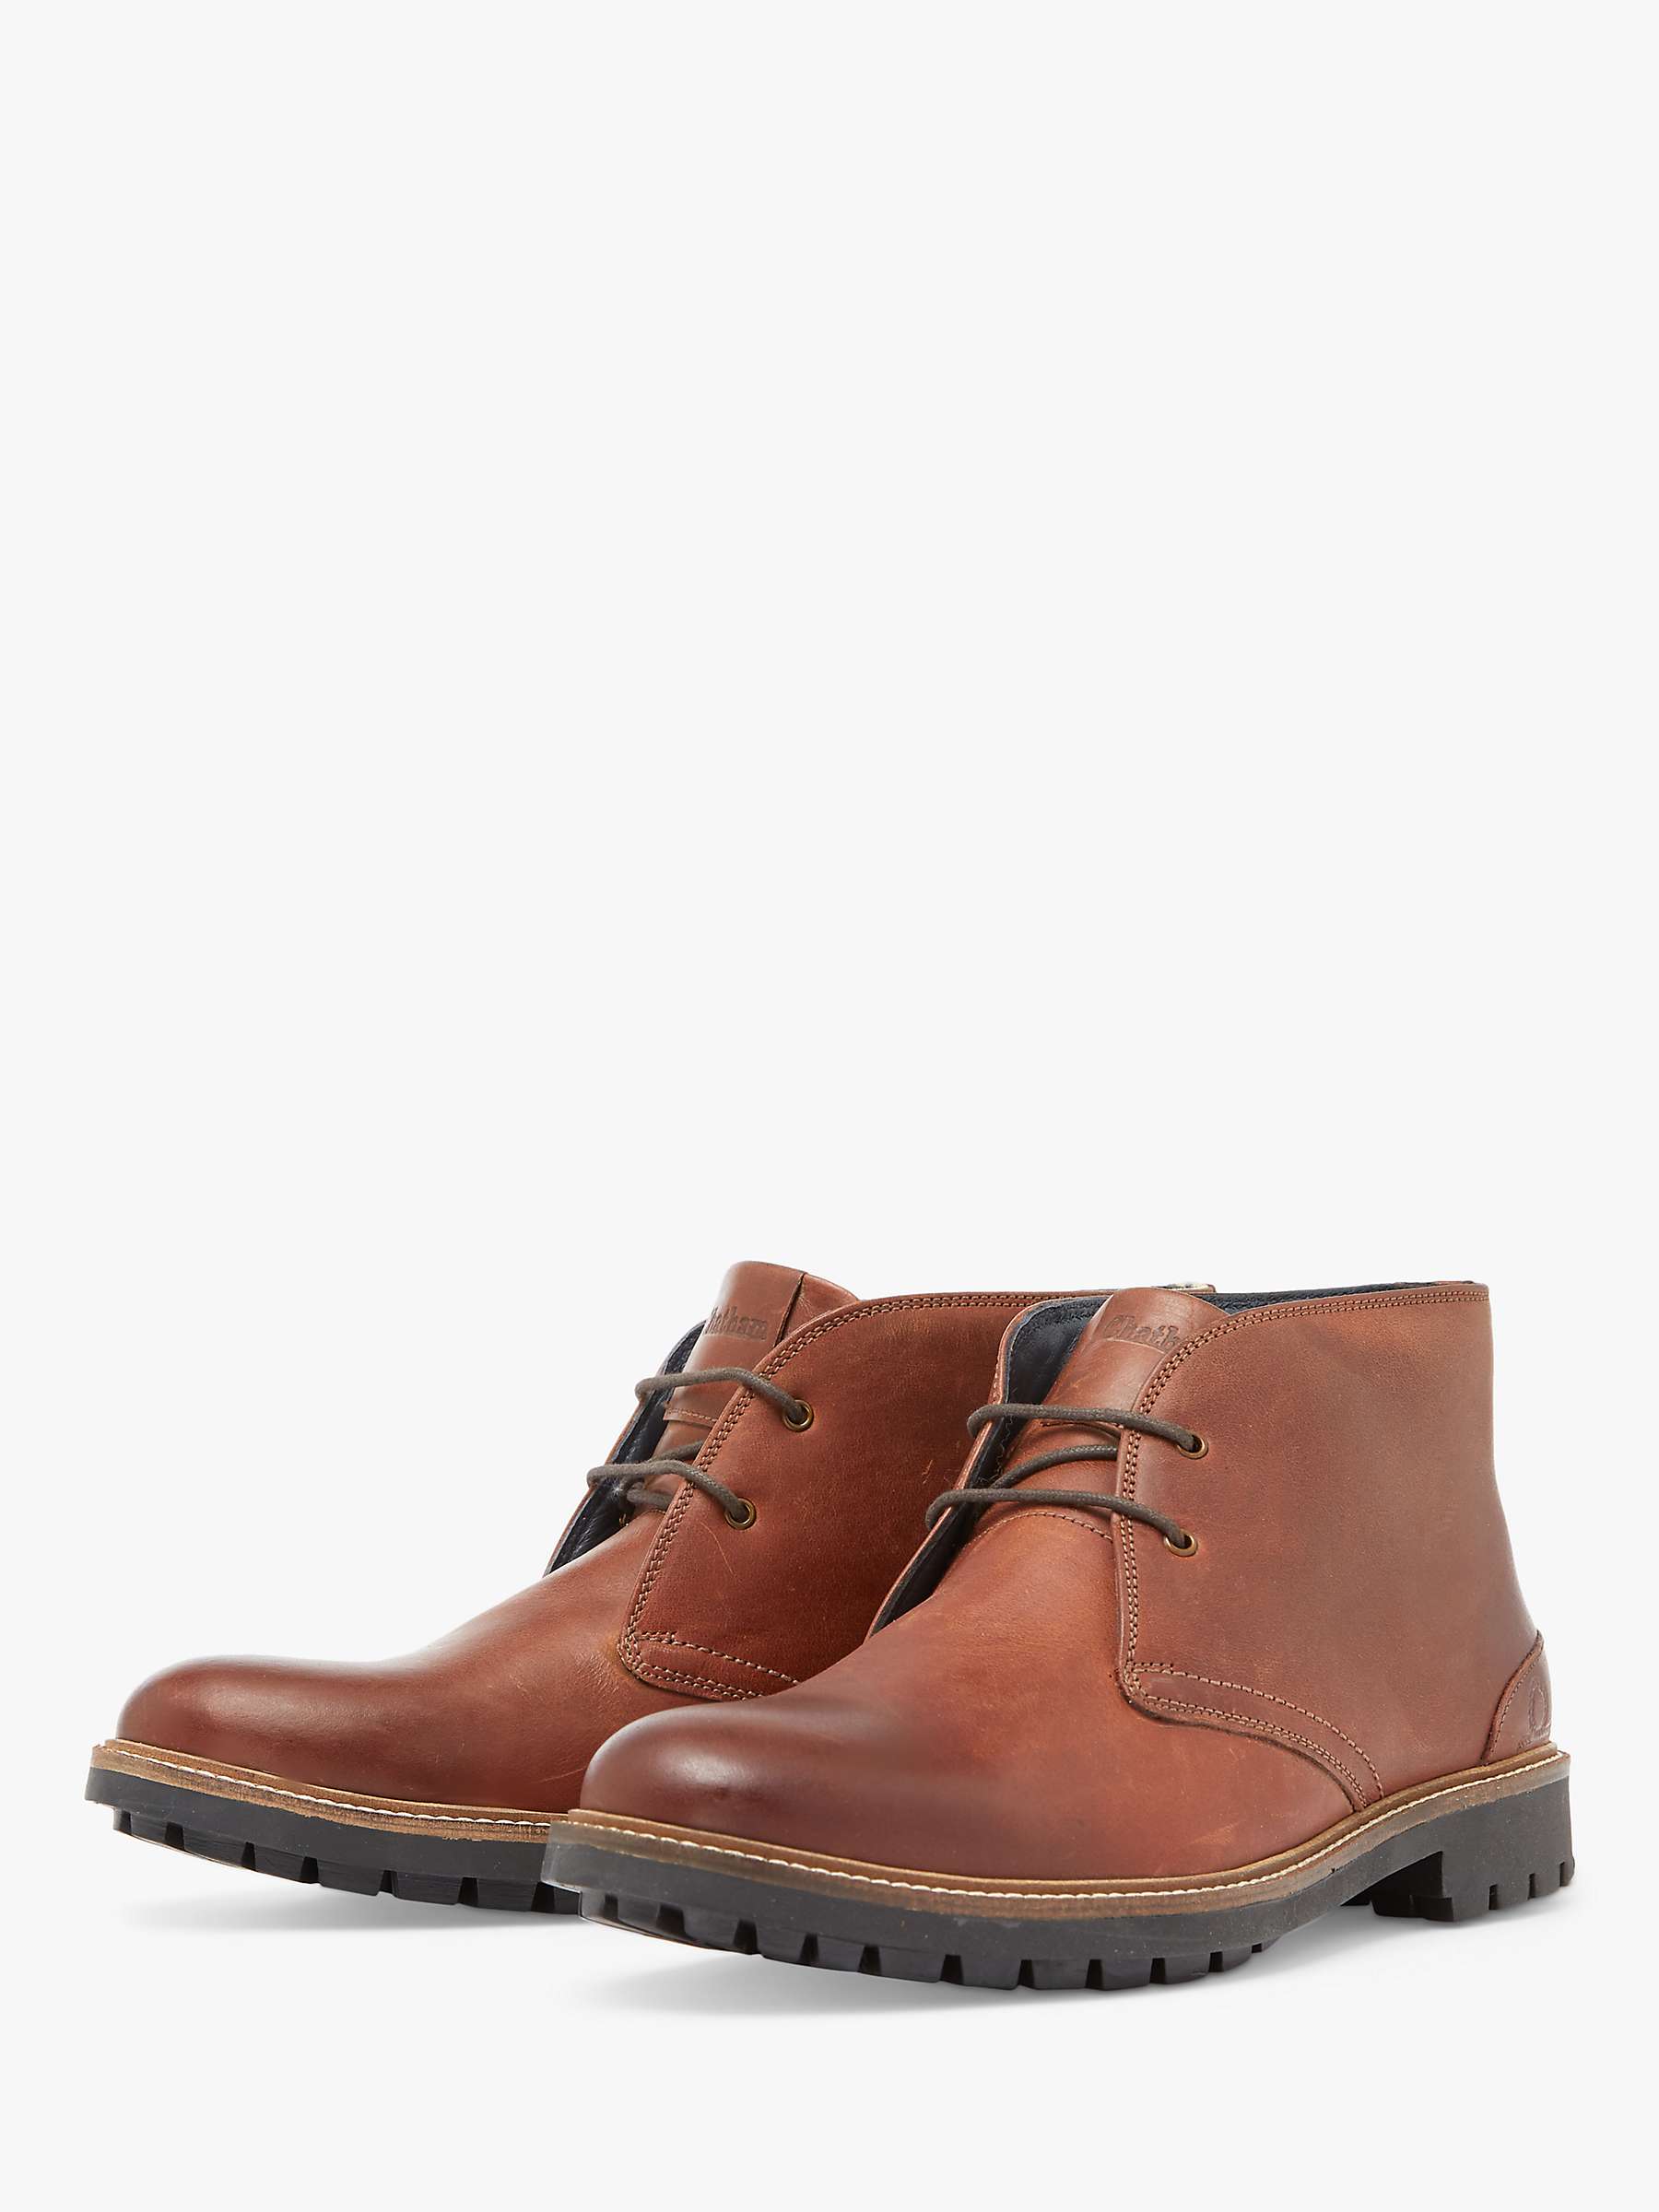 Buy Chatham Drogo Chukka Boots, Brown Tan Online at johnlewis.com